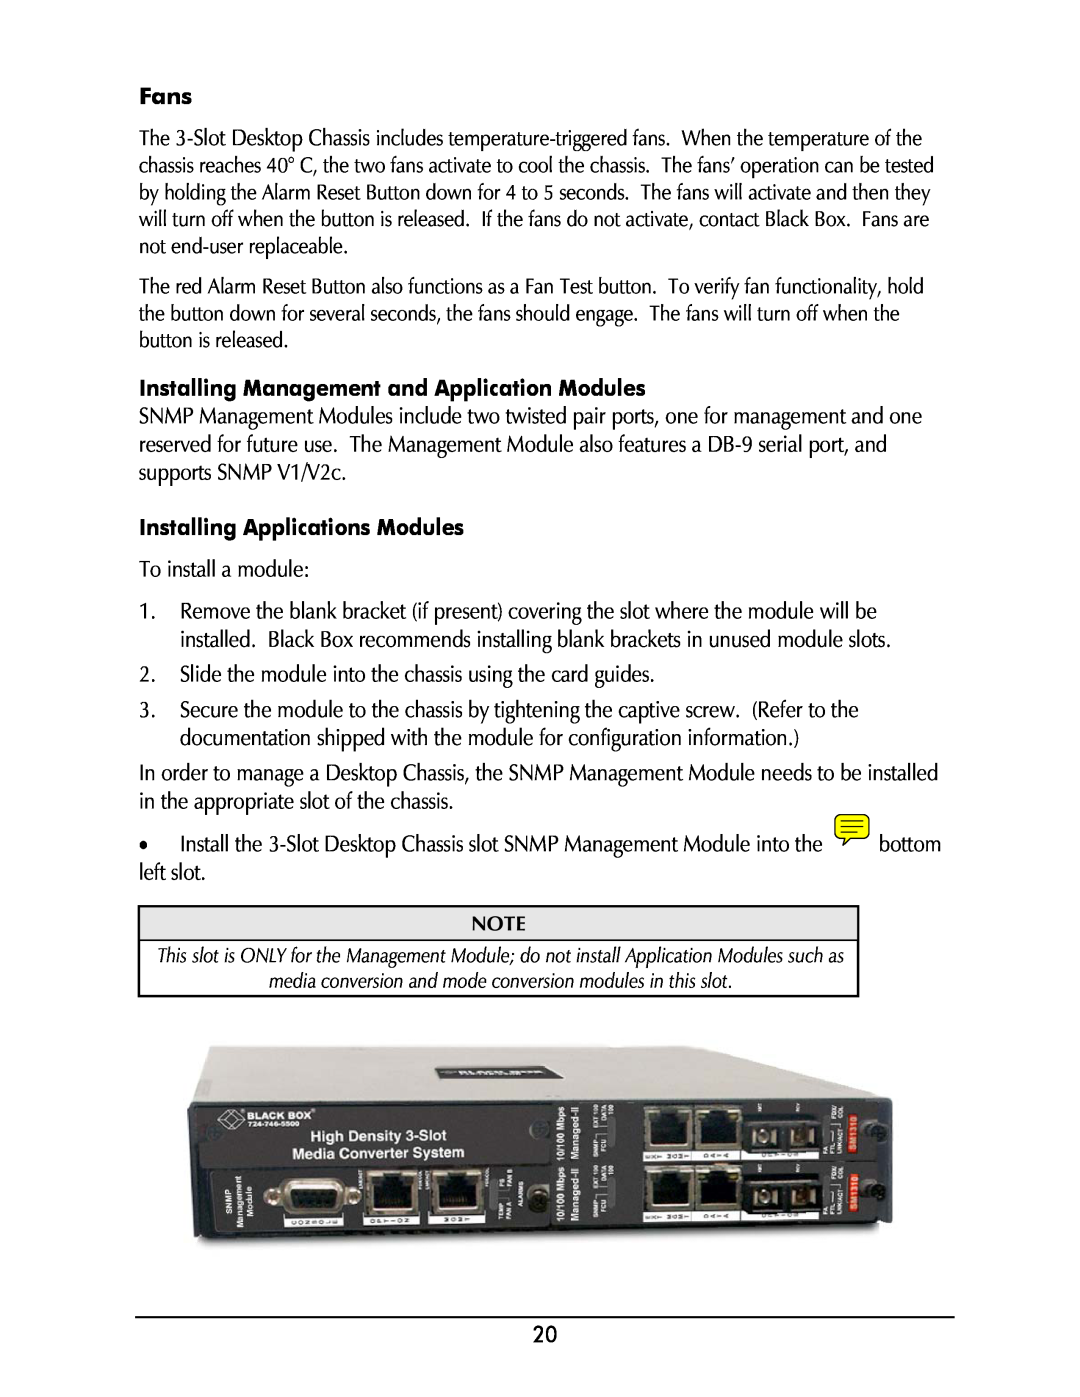 Black Box LMC5203A, LMC5208A-R2 manual Fans, Installing Management and Application Modules, Installing Applications Modules 